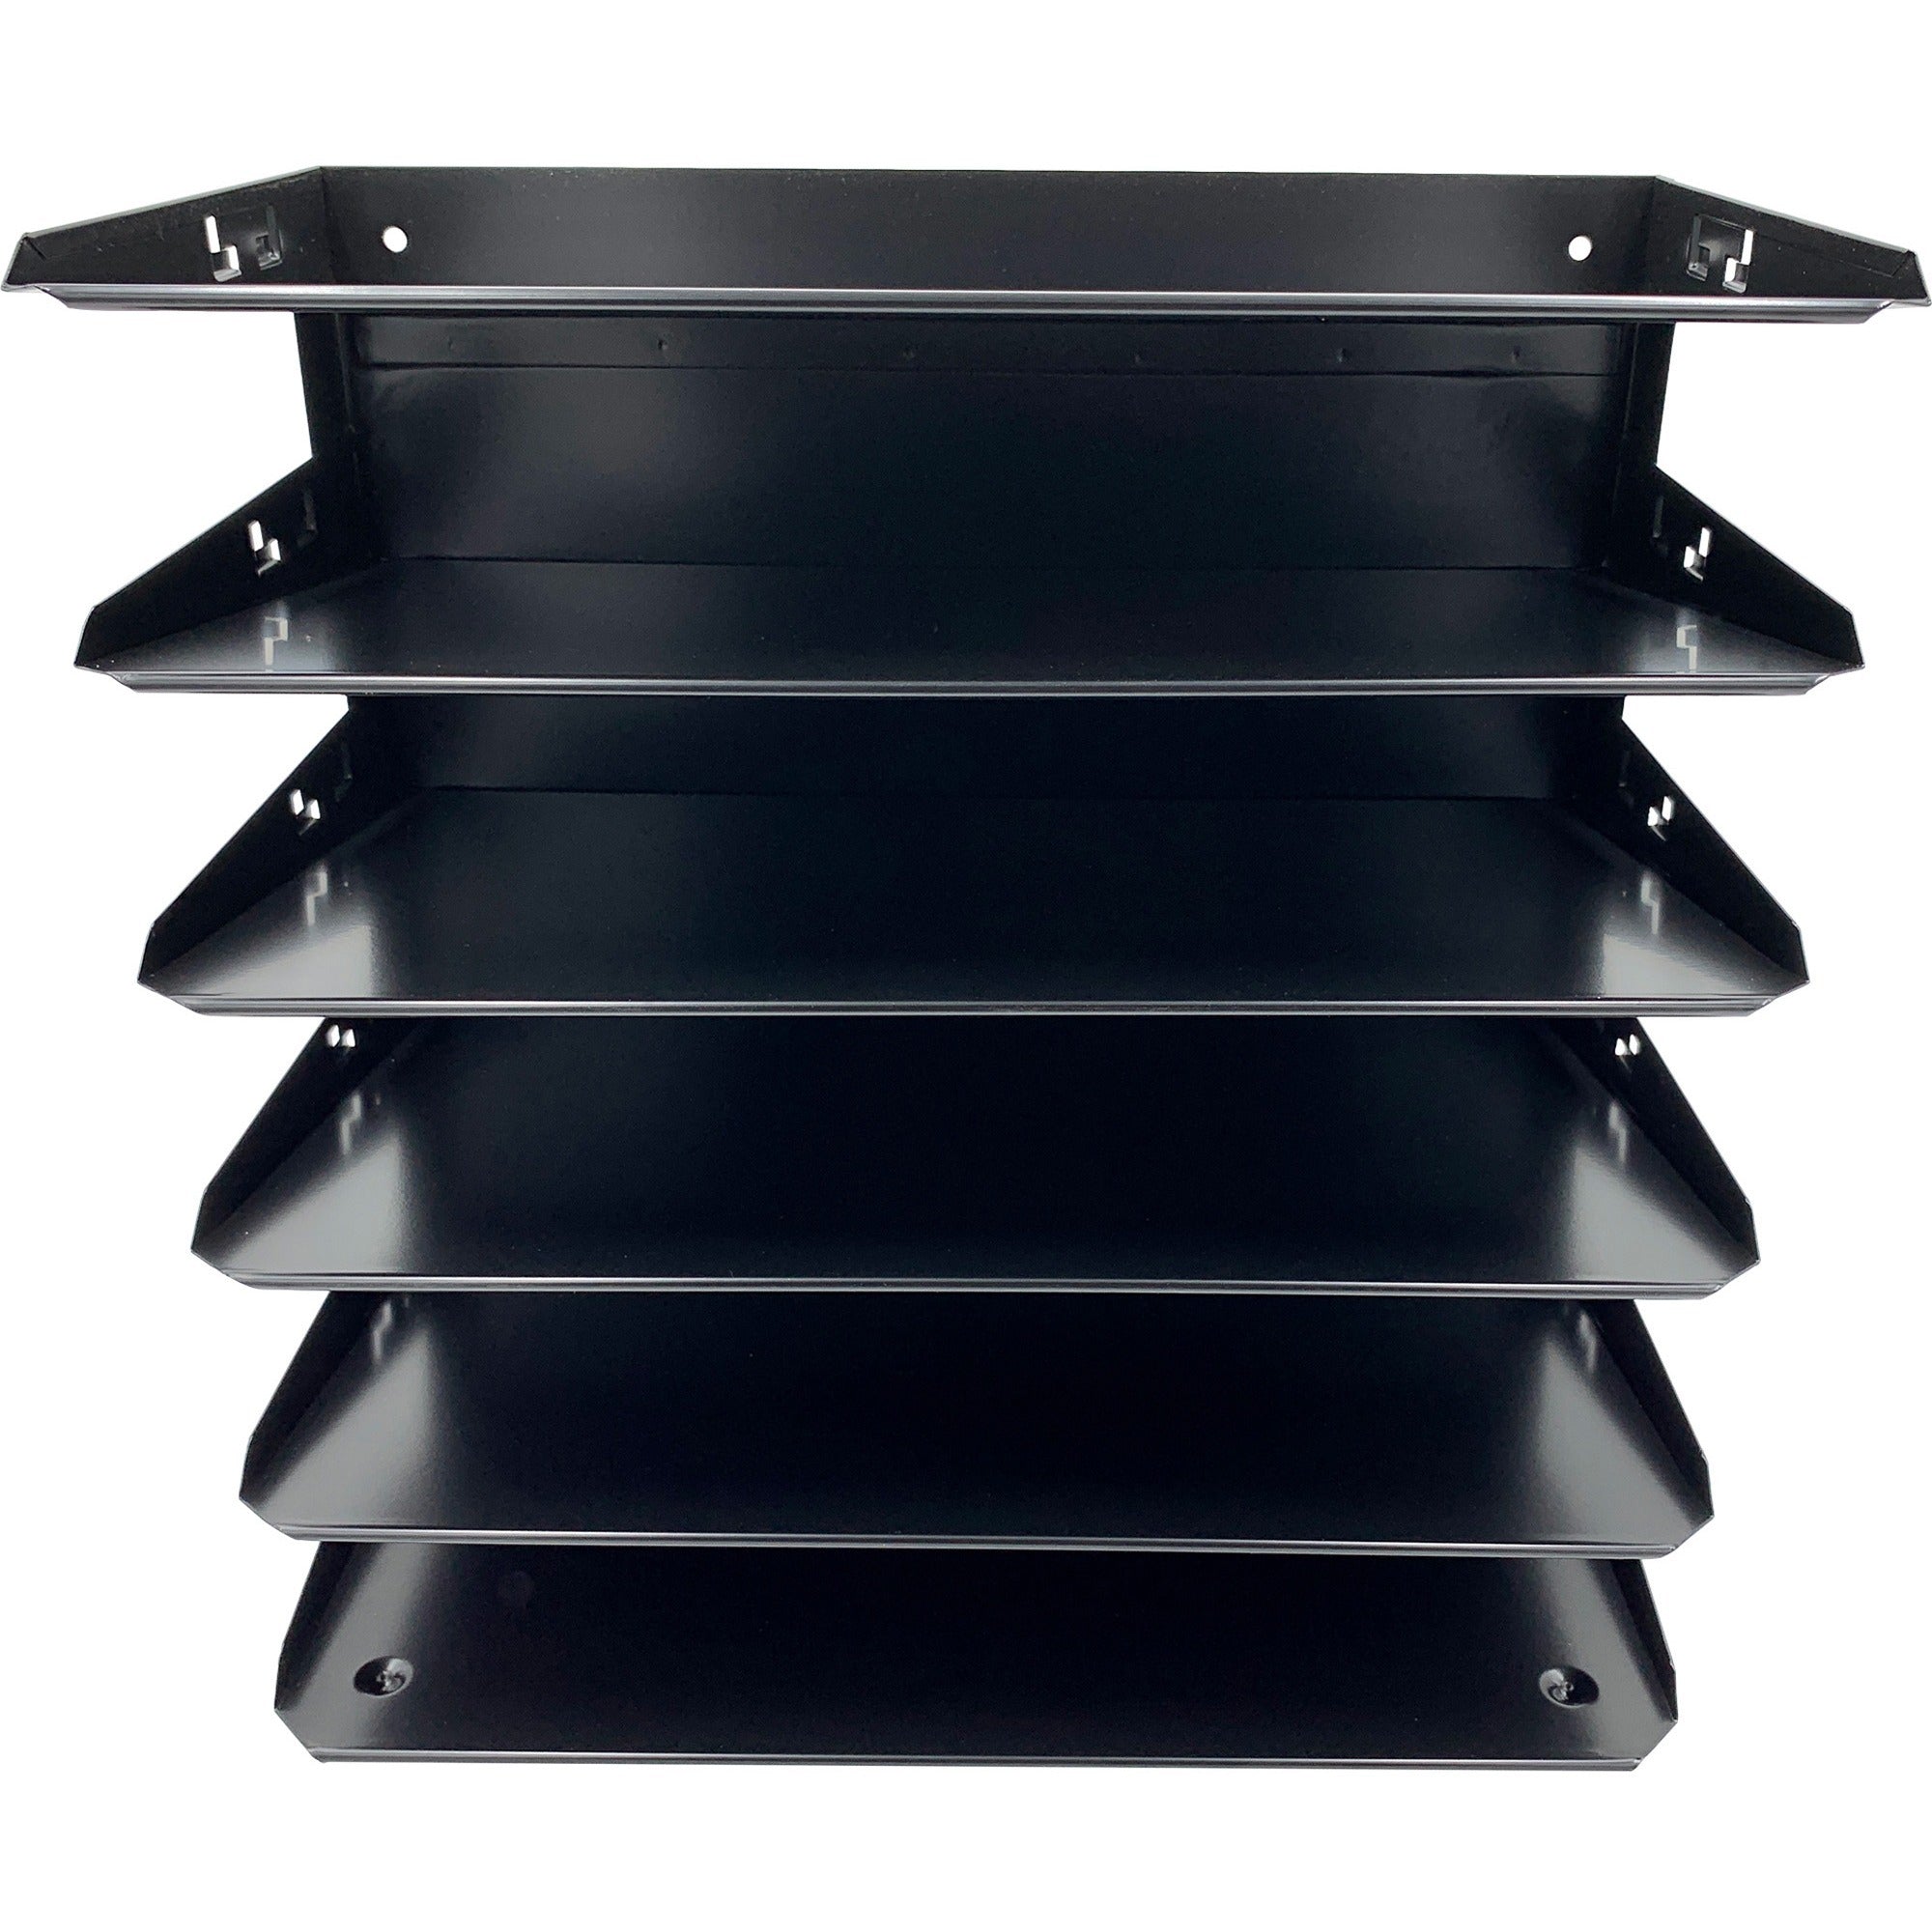 huron-horizontal-slots-desk-organizer-6-compartments-horizontal-15-height-x-15-width-x-87-depth-durable-label-holder-black-steel-1-each_hurhasz0153 - 2